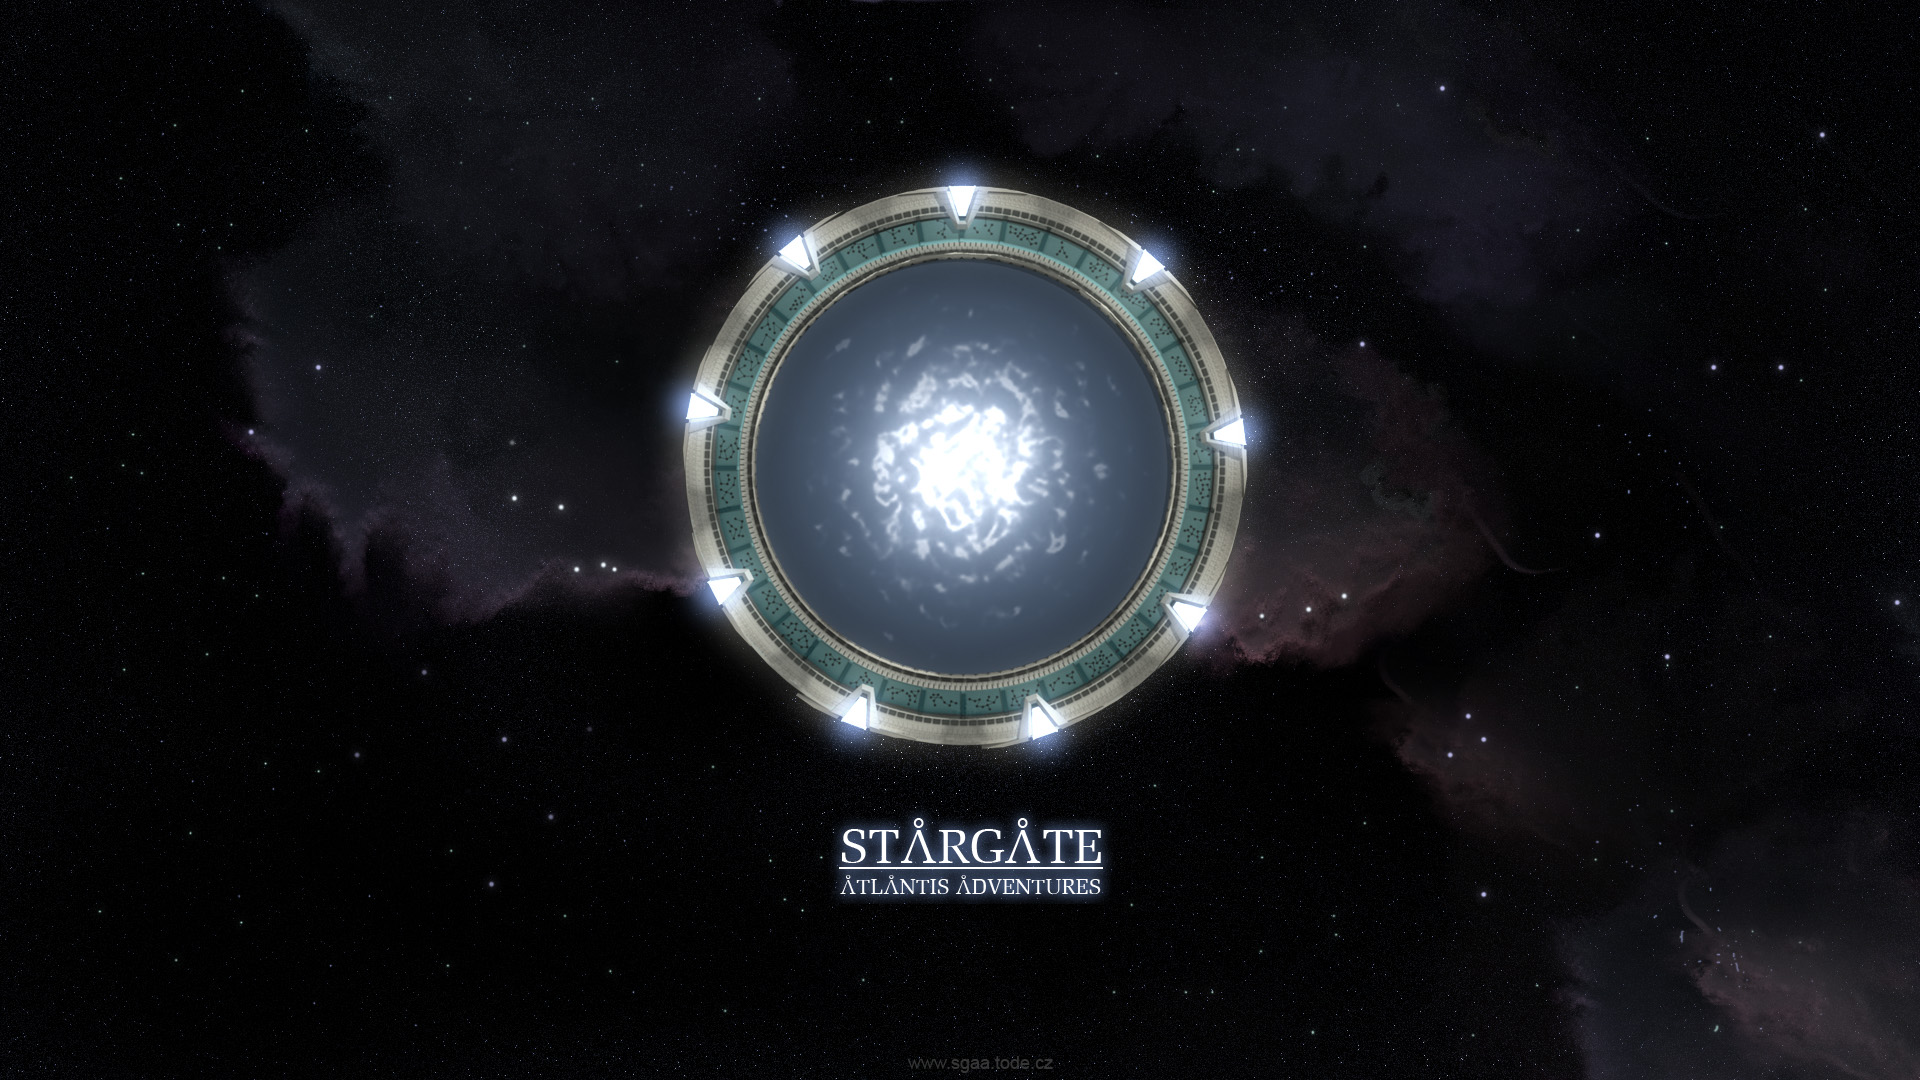 Stargate Atlantis iPhone Wallpaper